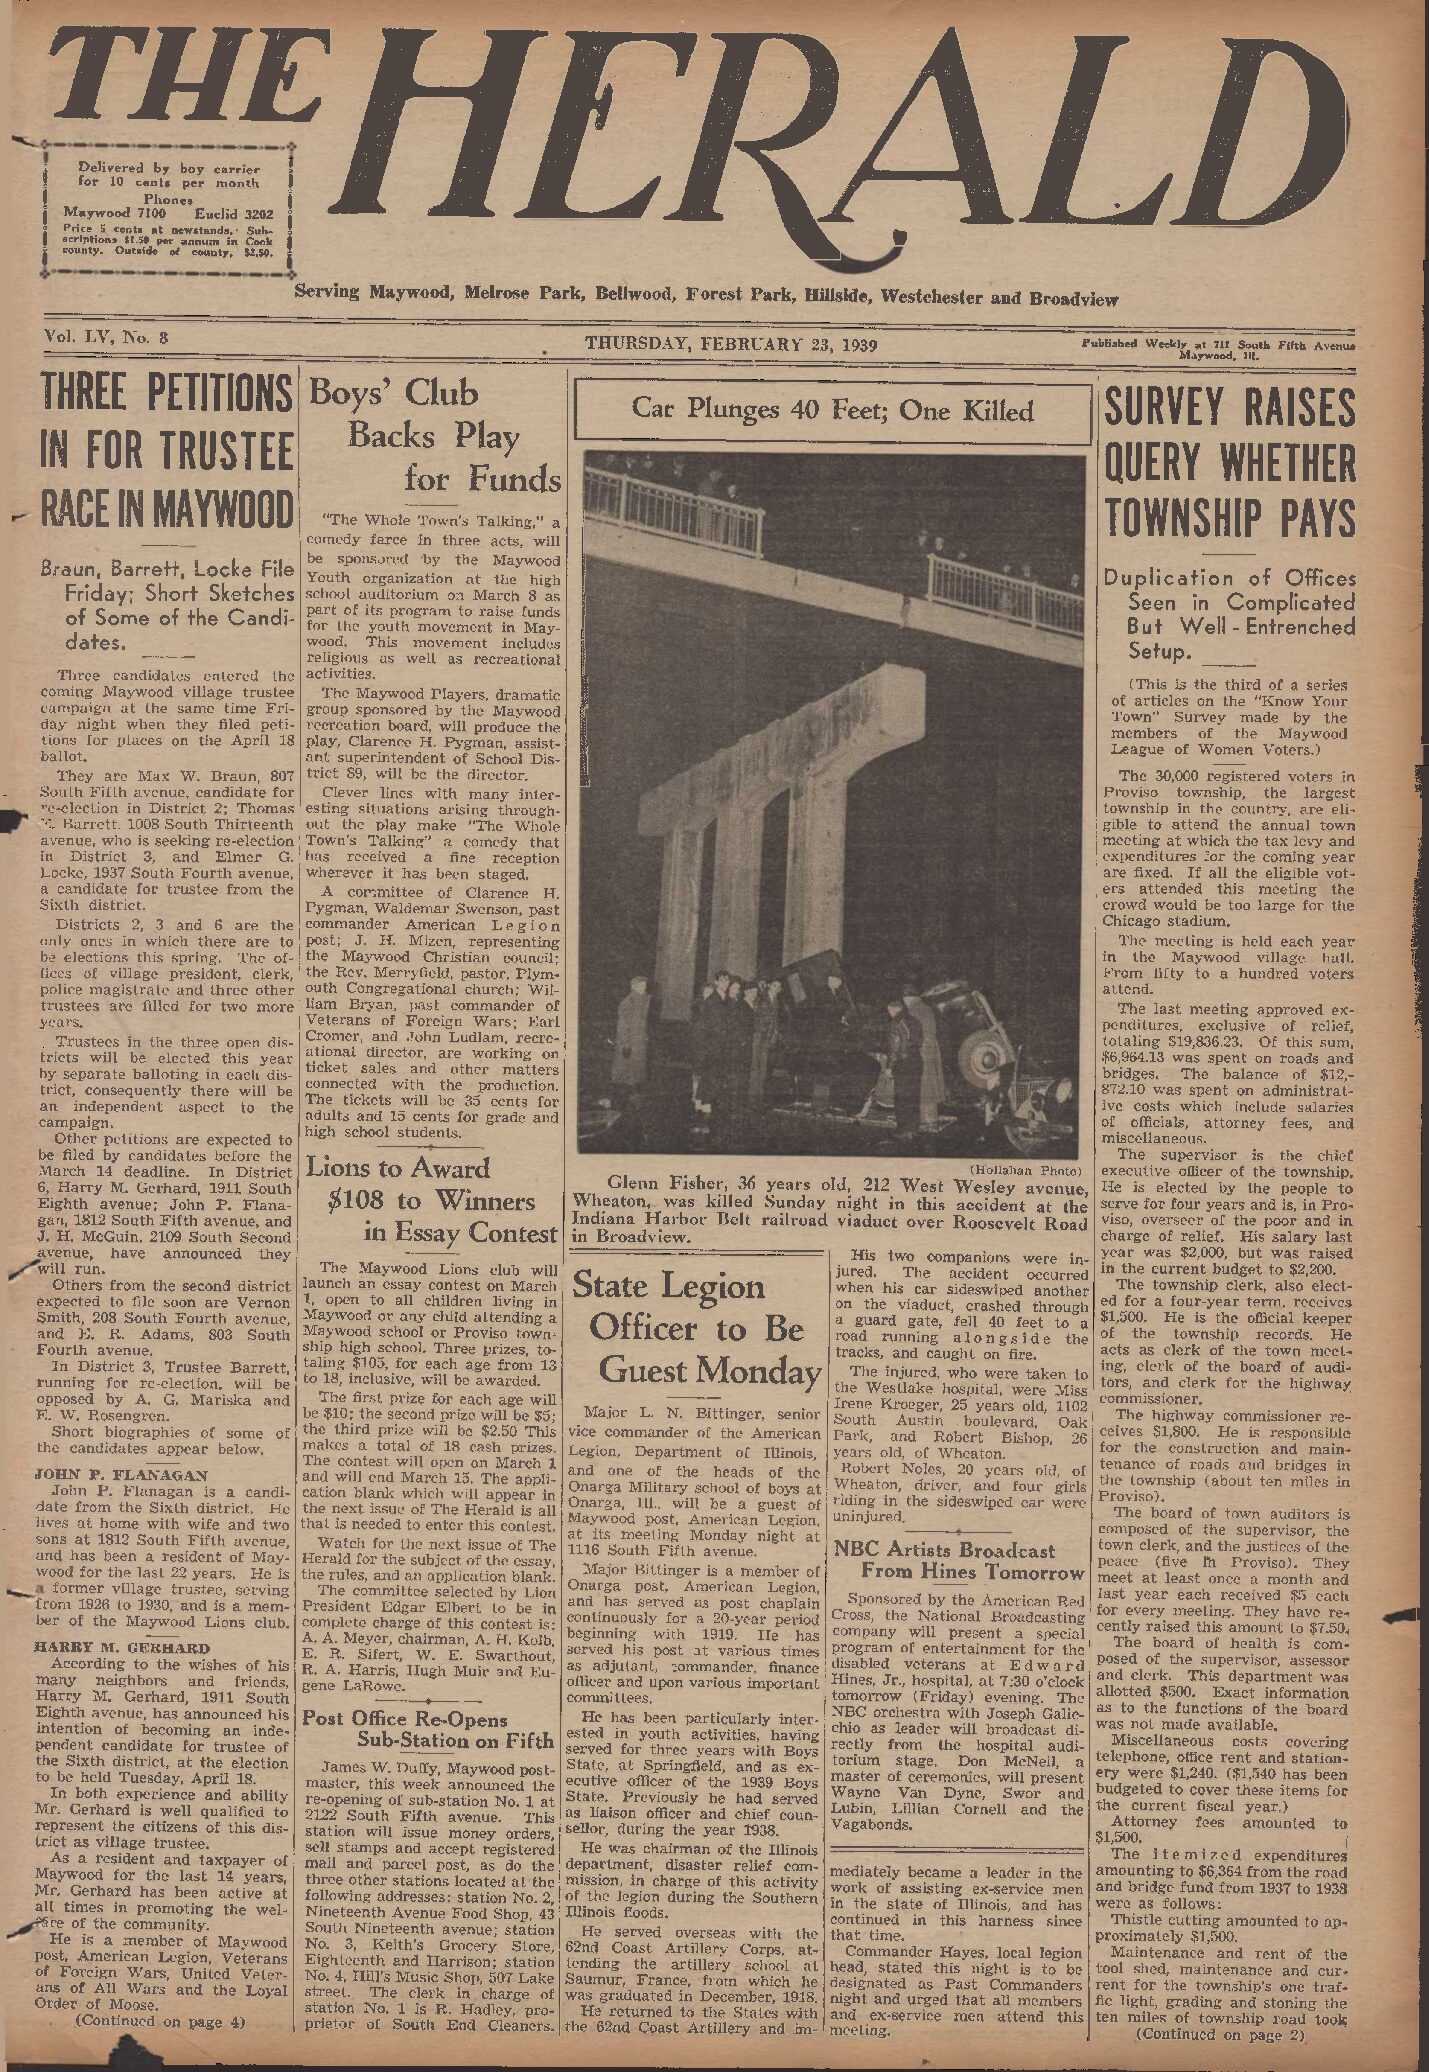 The Herald – 19390223